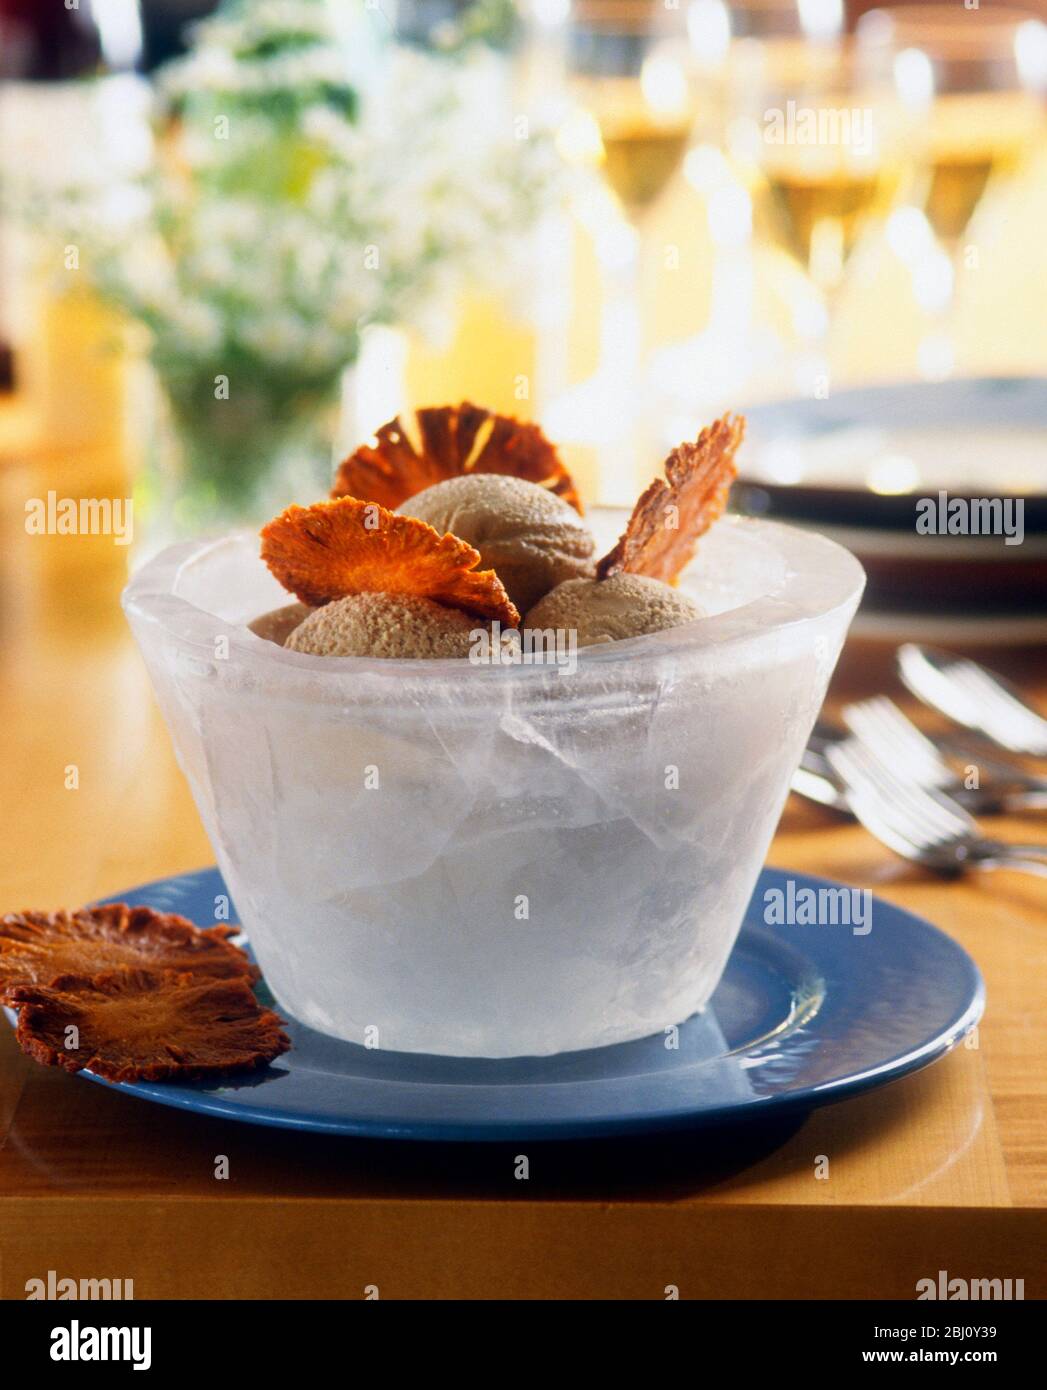 https://c8.alamy.com/comp/2BJ0Y39/ice-bowl-serving-ice-cream-with-pineapple-crisps-2BJ0Y39.jpg